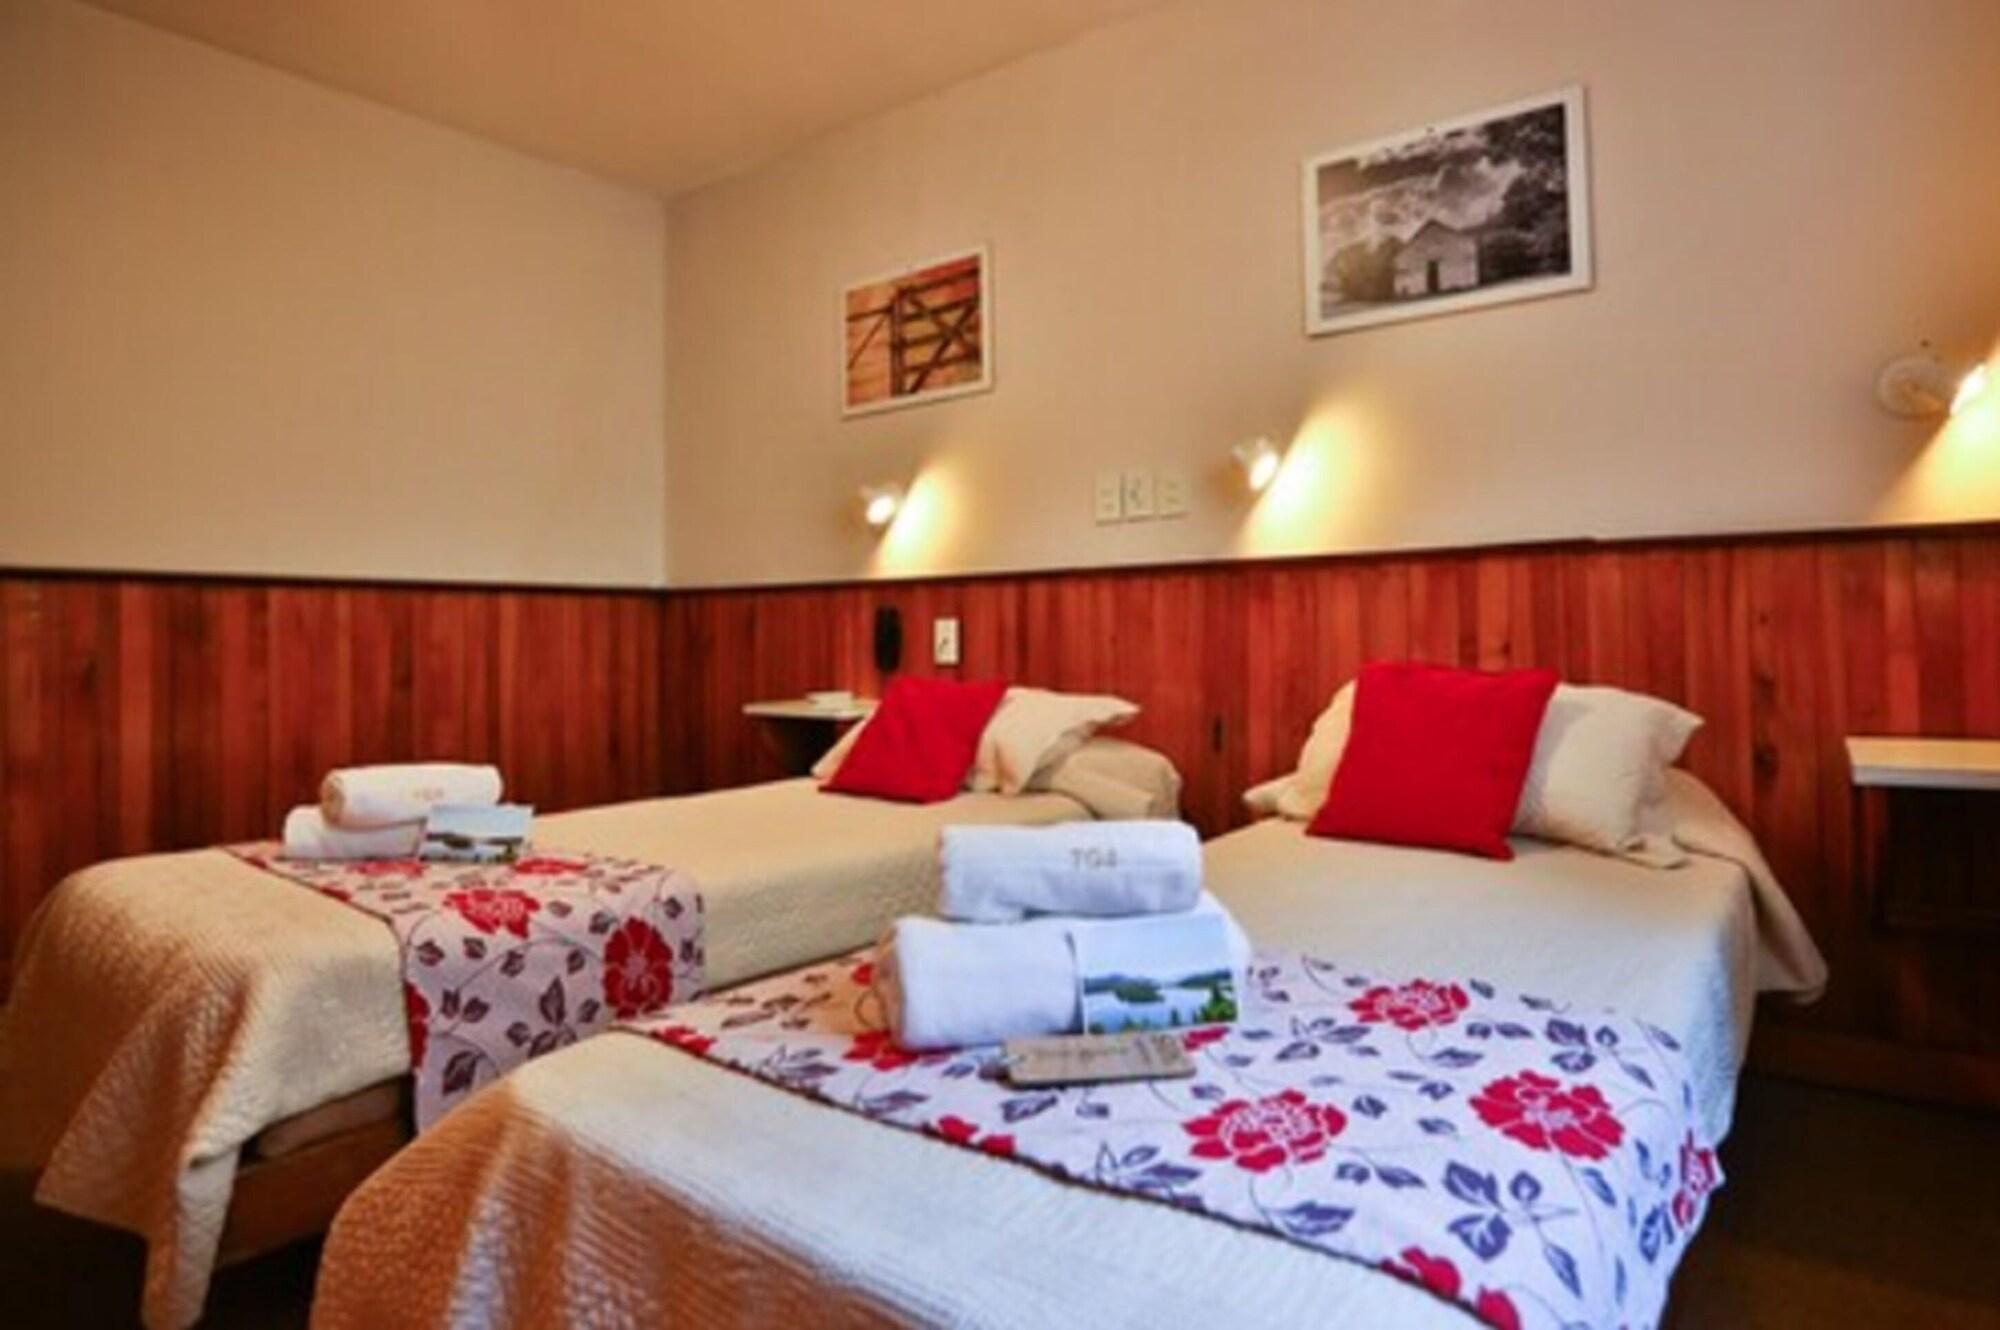 Hotel Bariloche By Tierra Gaucha Kültér fotó